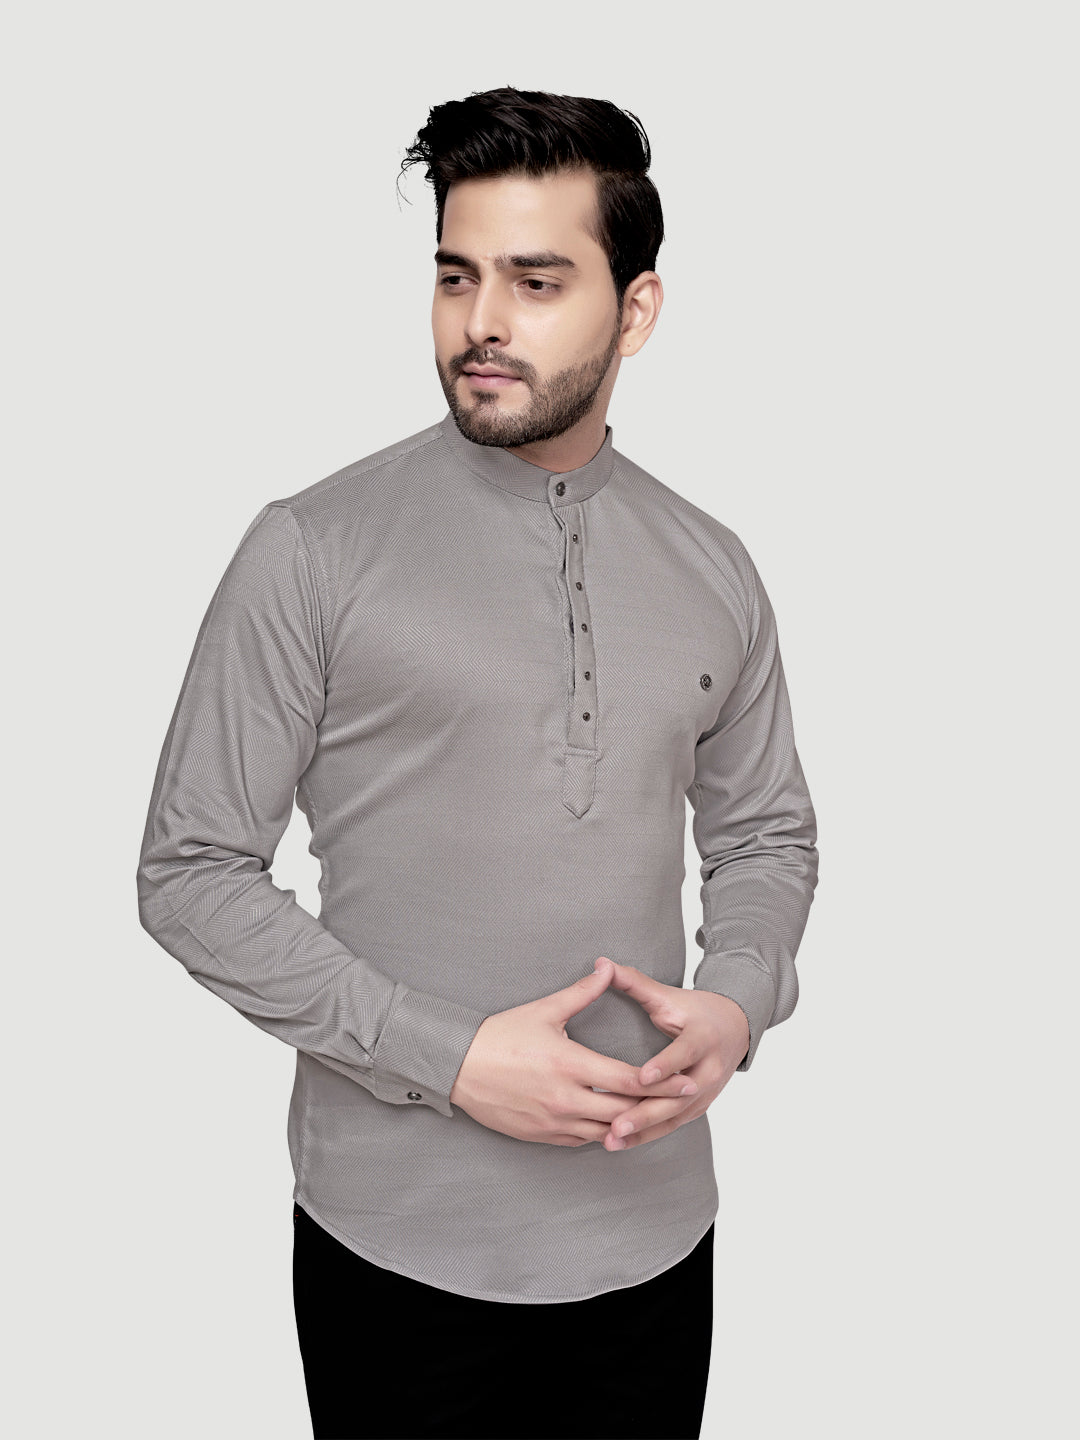 Black and White Shirts Men's Designer Short Kurta with Metal Buttons Light Grey